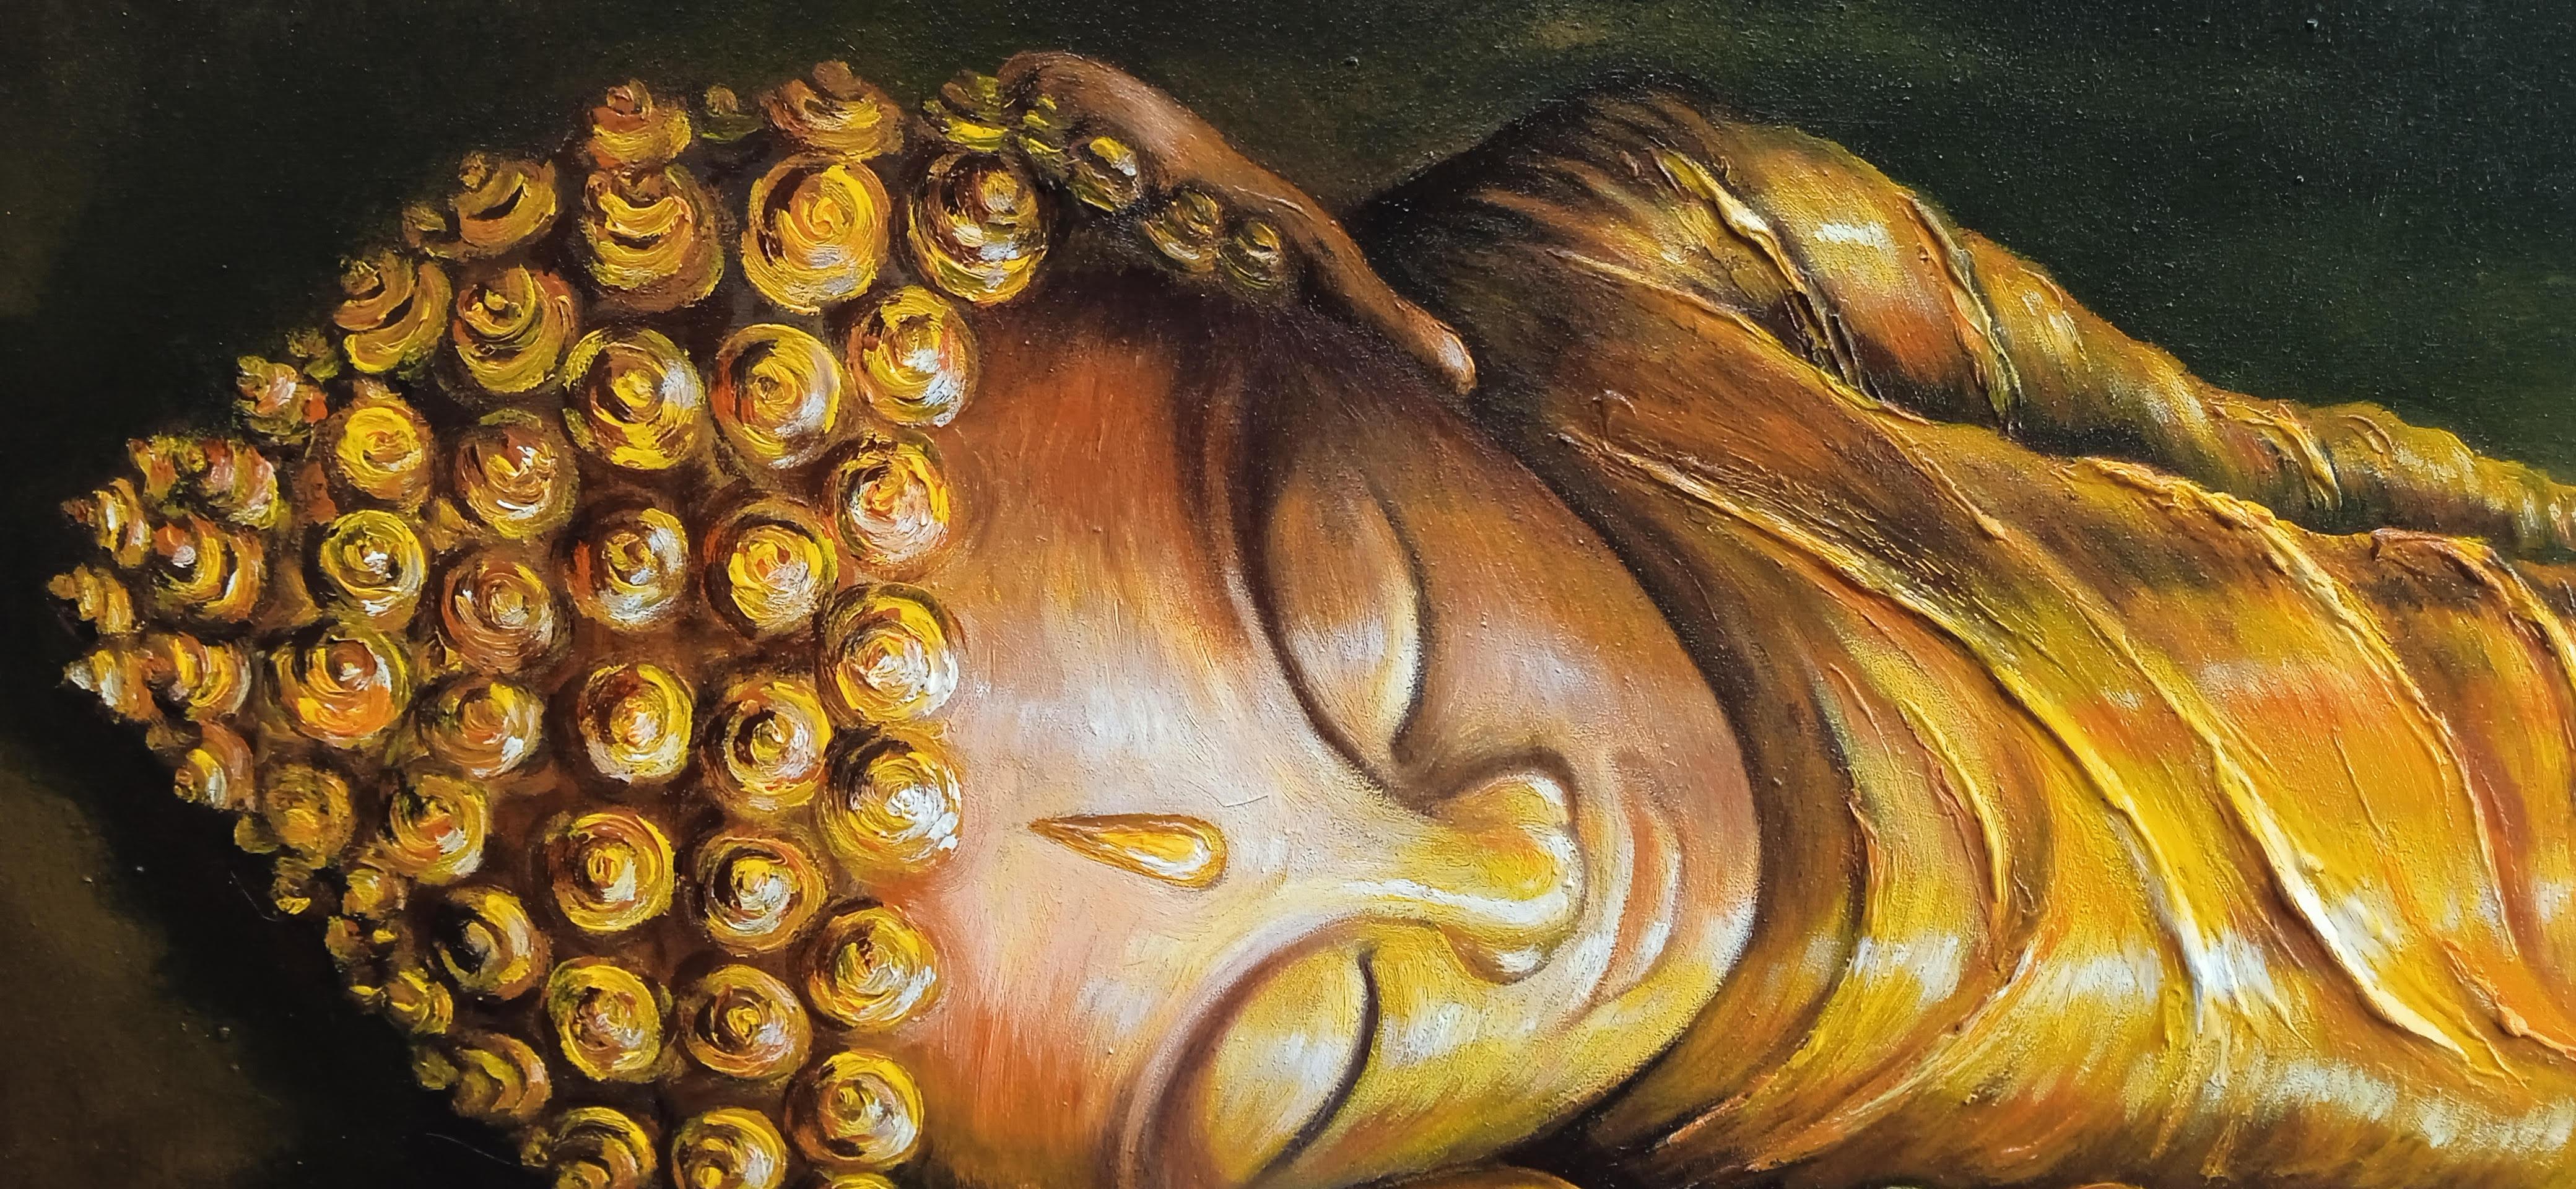 The Sleeping Buddha - Painting by Andre Wijaya